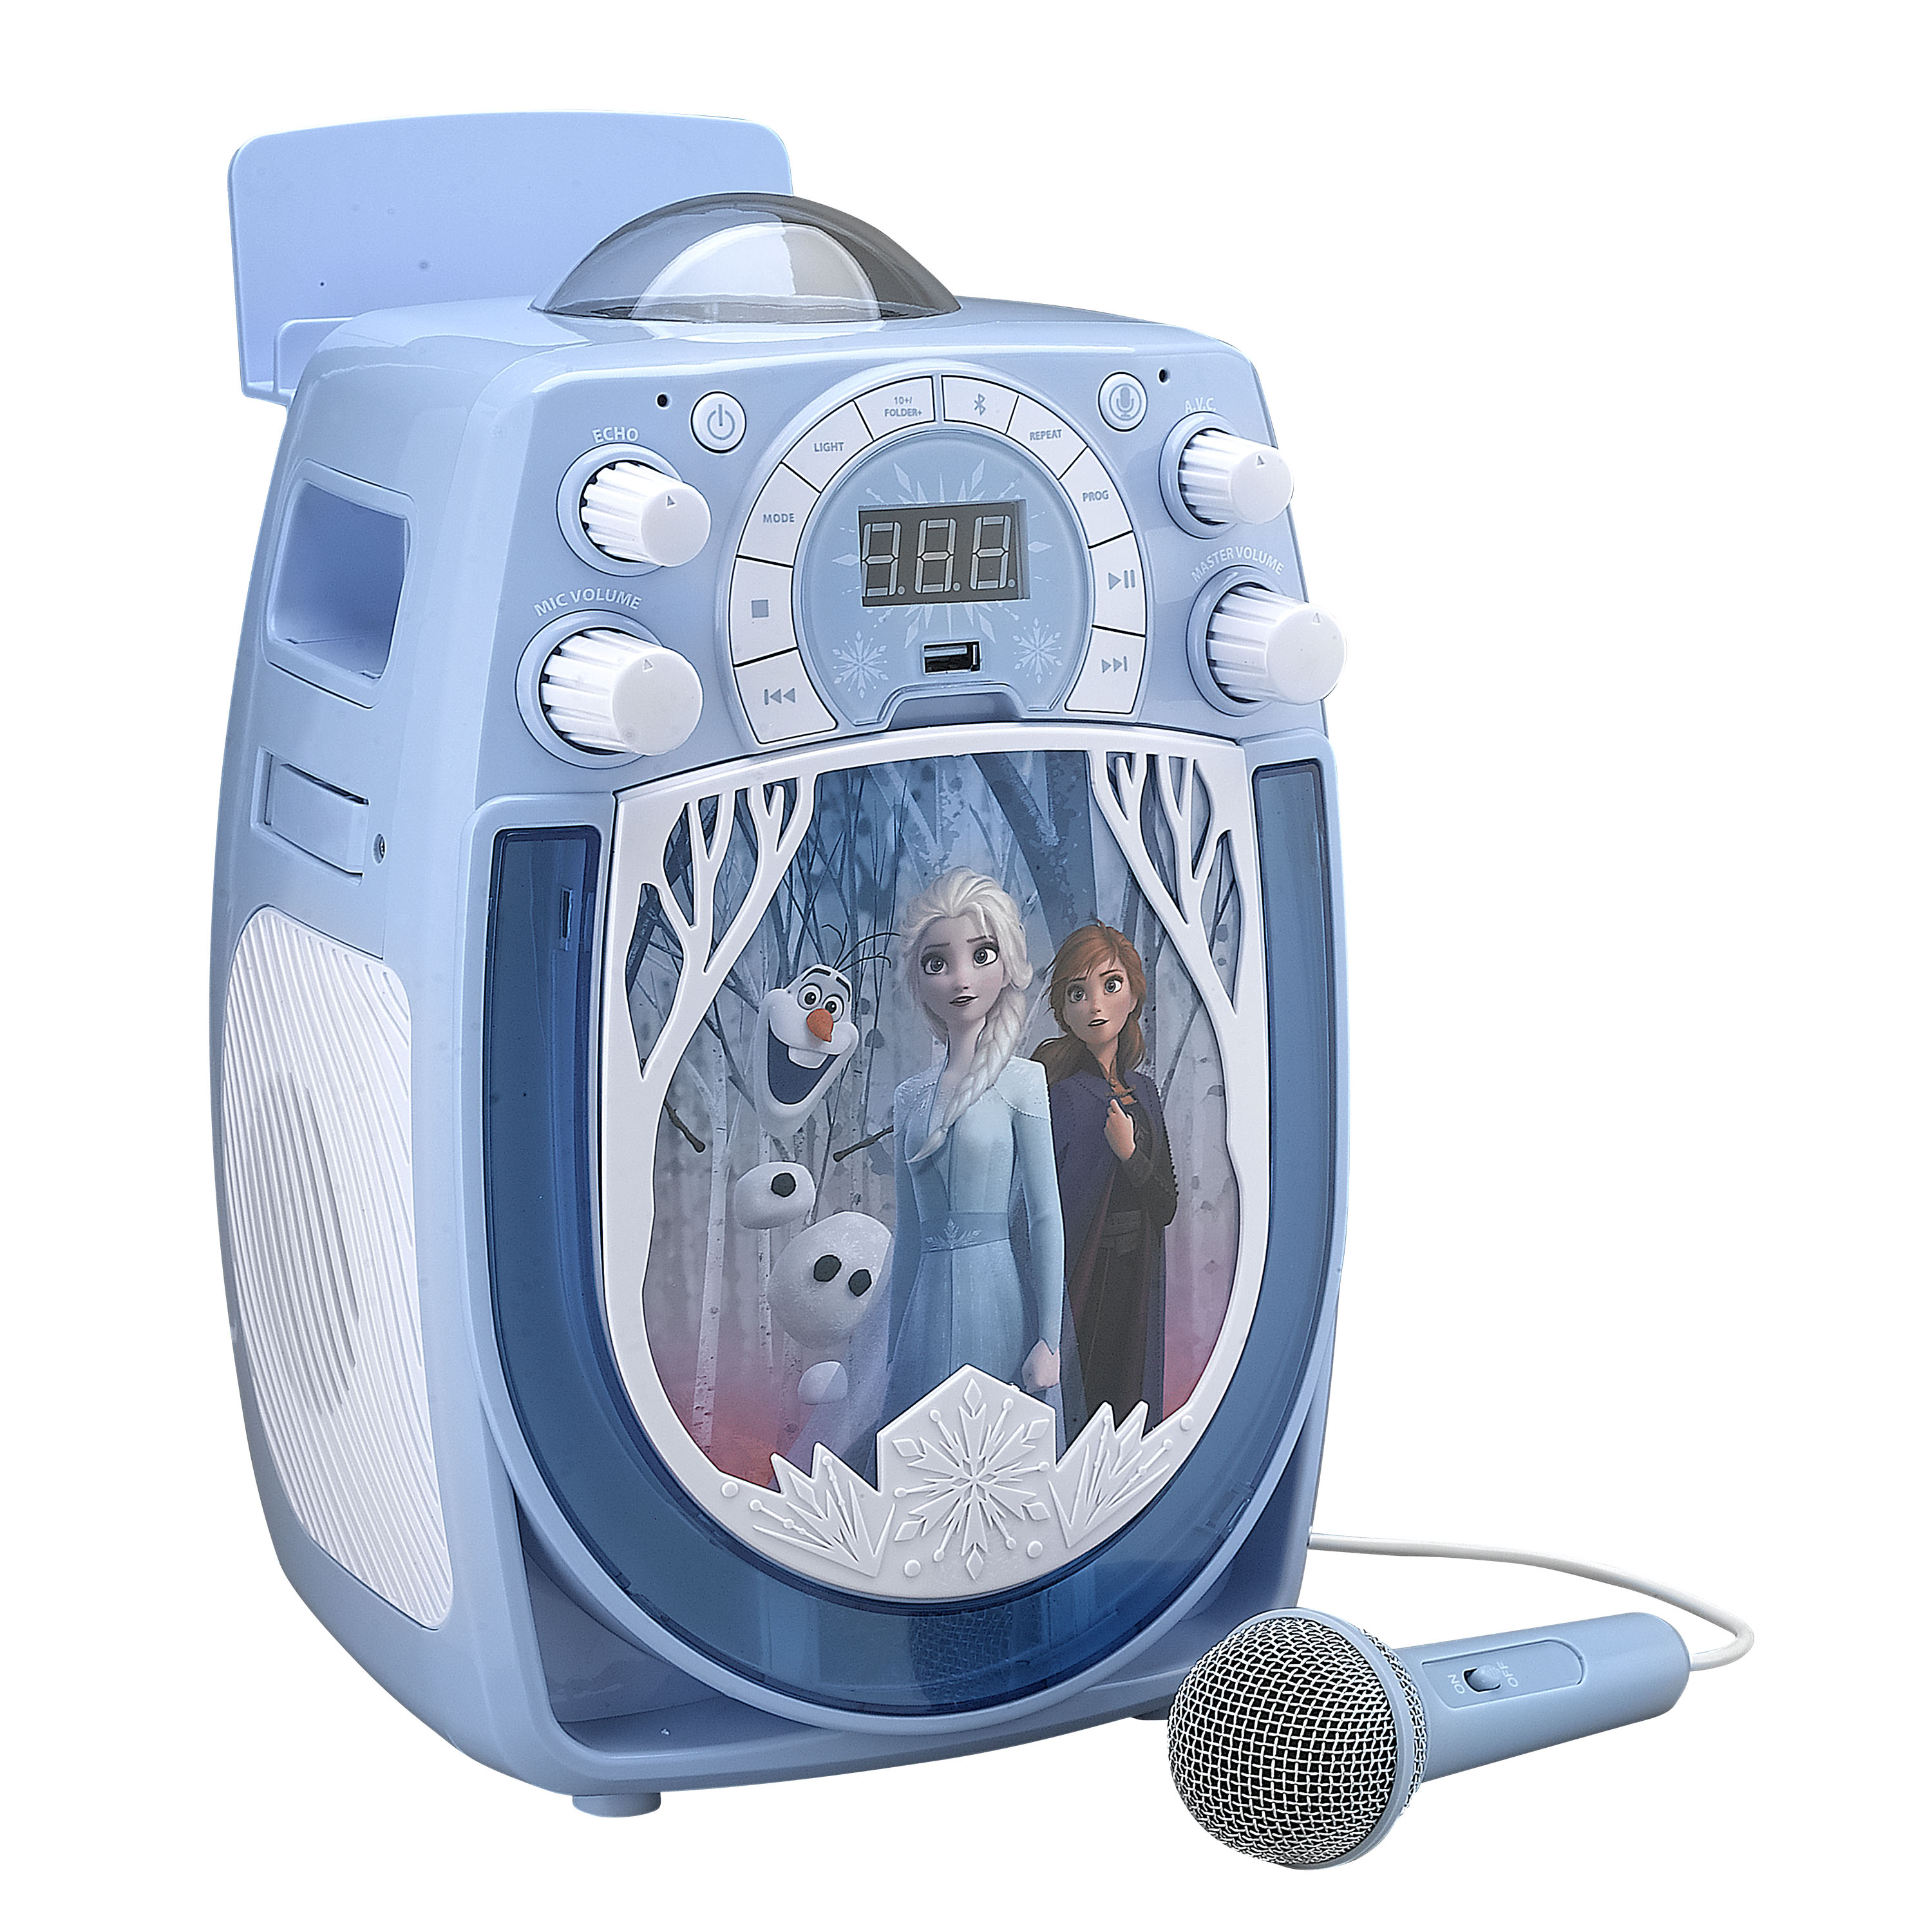 Frozen - Disney Frozen II Karaoke with Snowflake Projector and Microphone (cd+g) - image 1 of 6